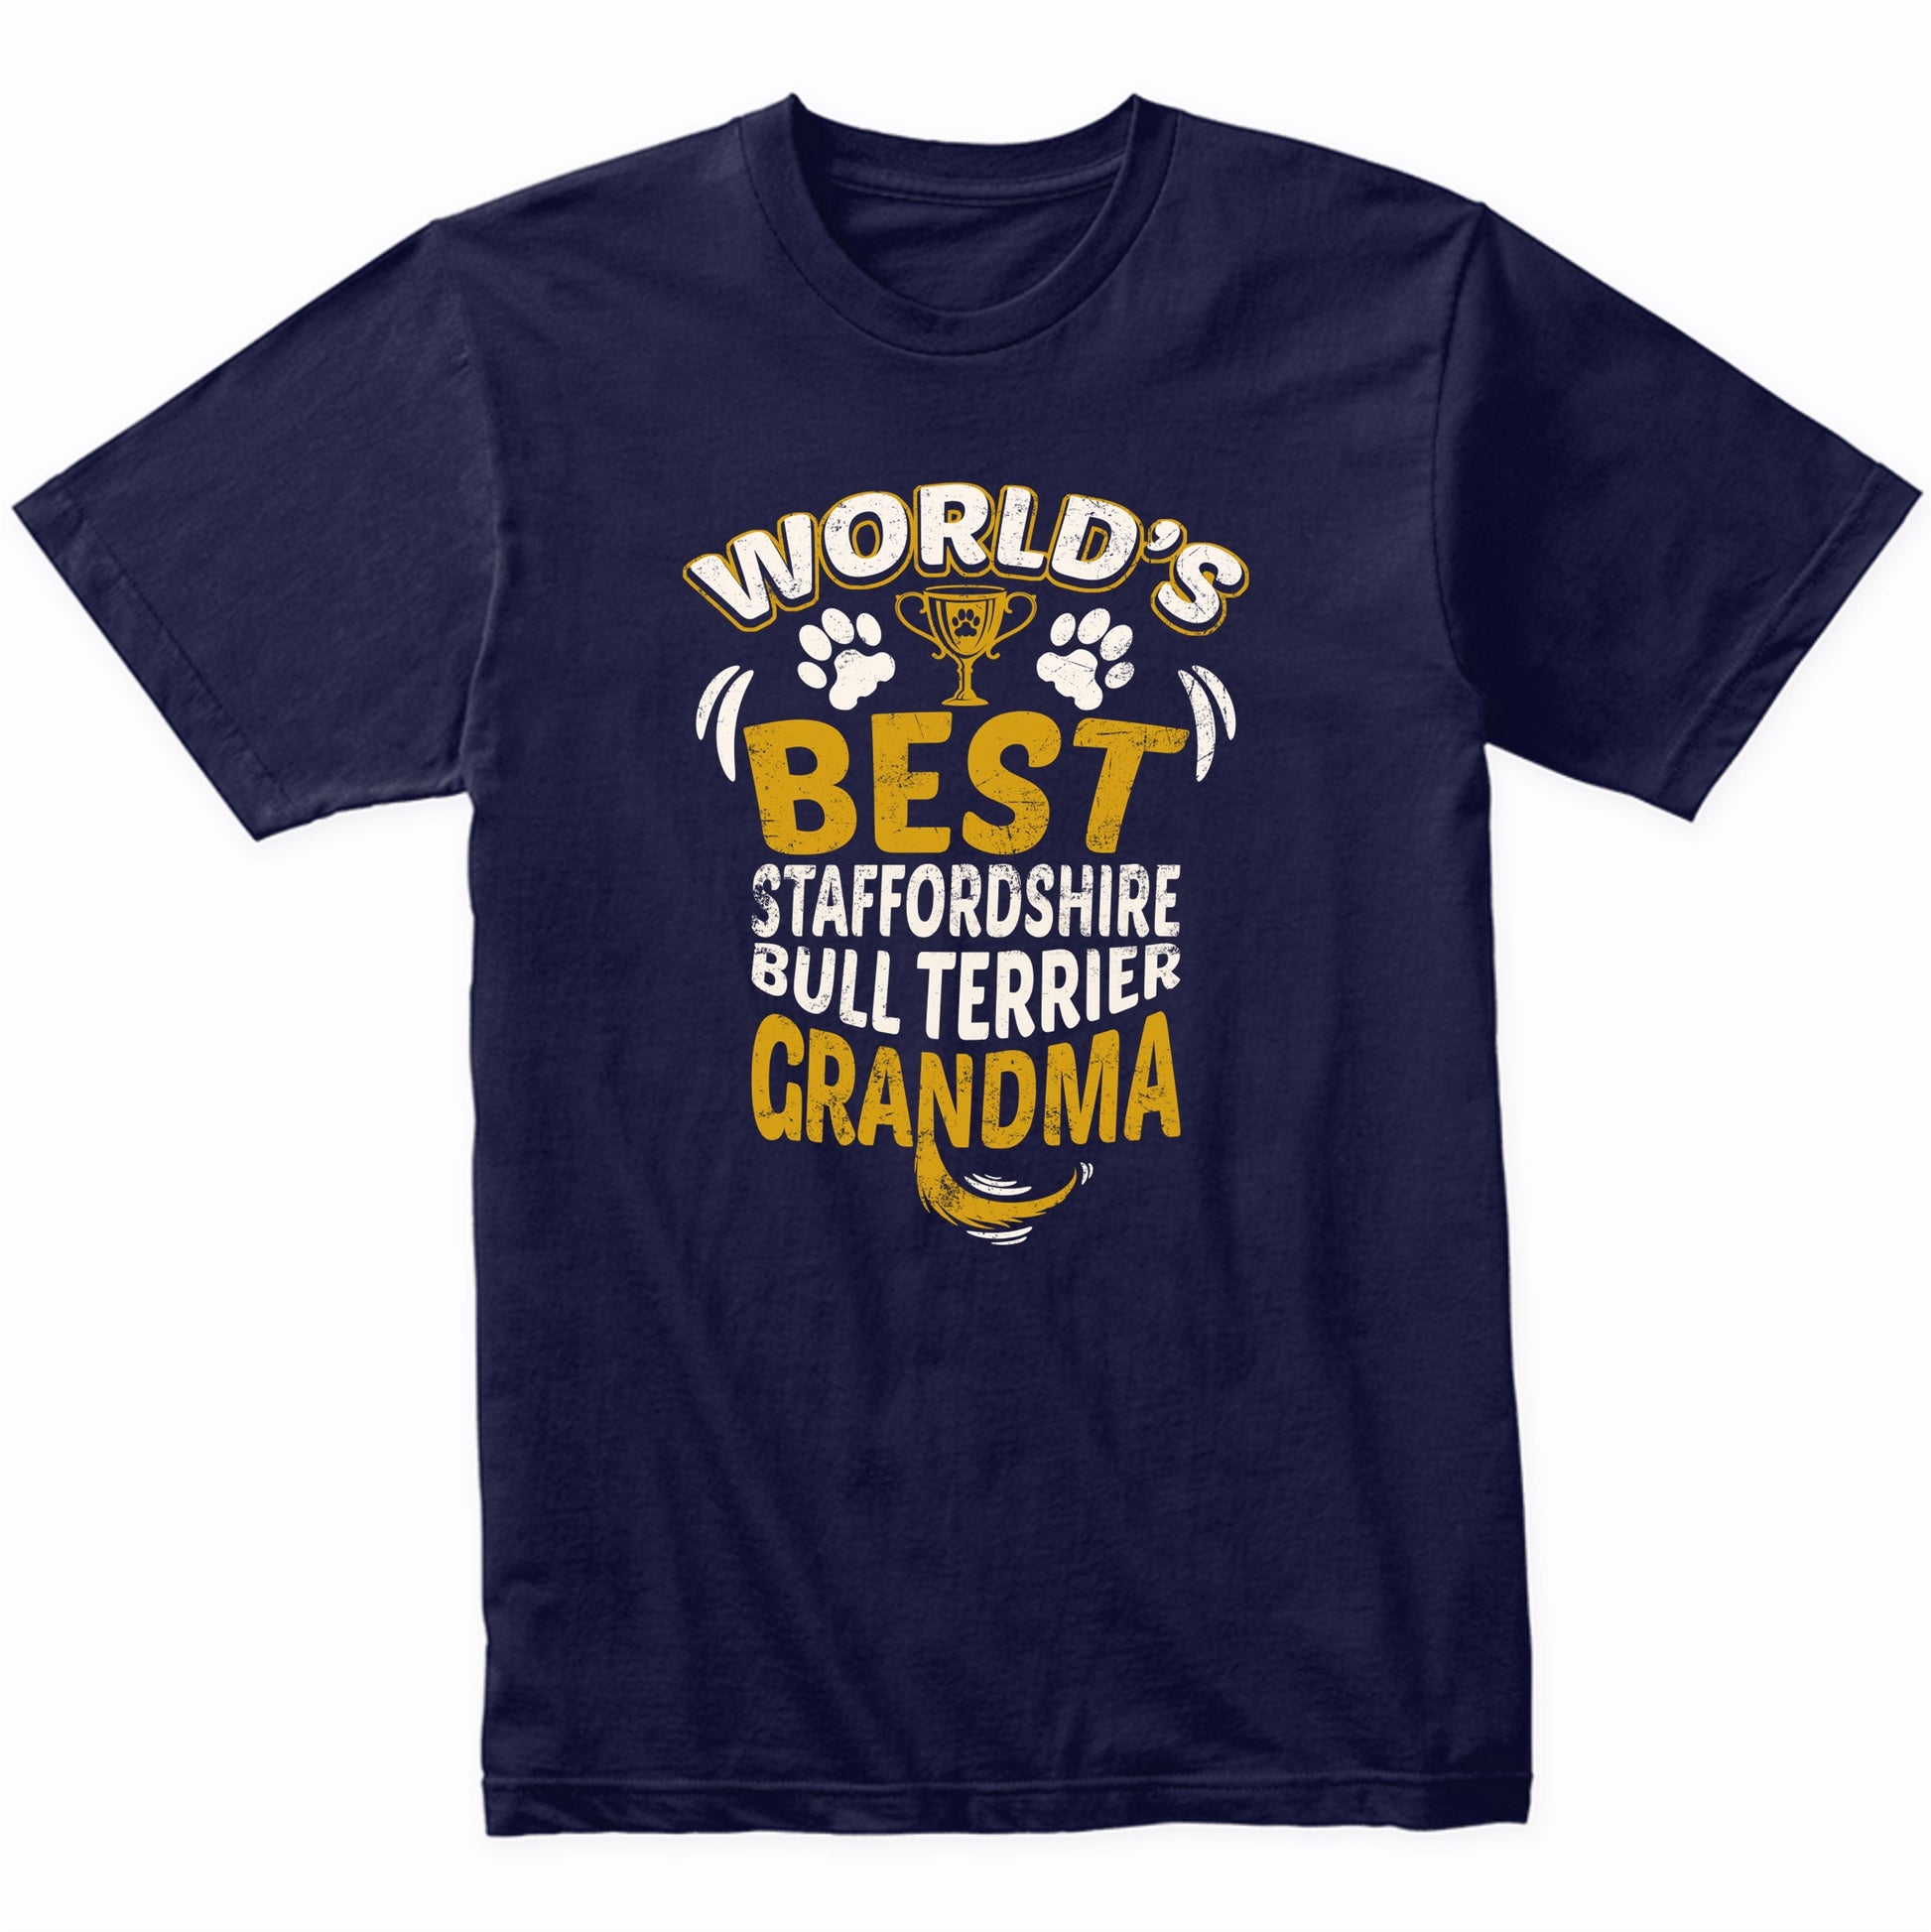 World's Best Staffordshire Bull Terrier Grandma T-Shirt